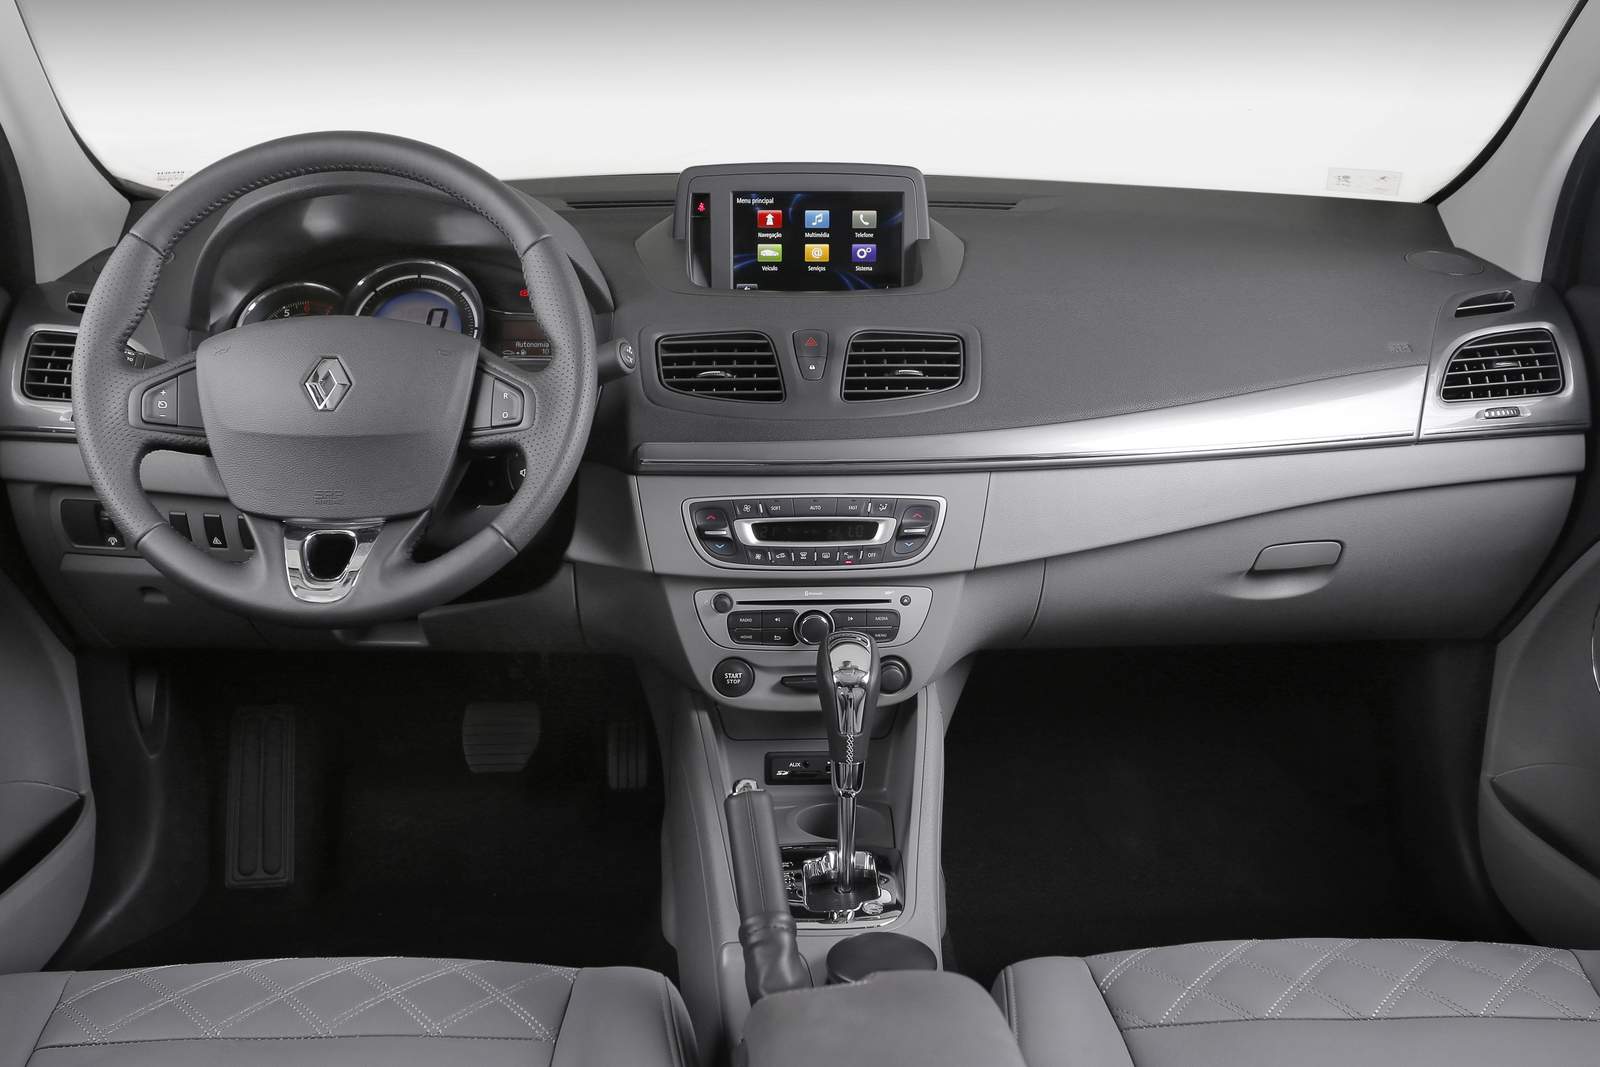 Novo Renault Fluence 2015 - interior - painel